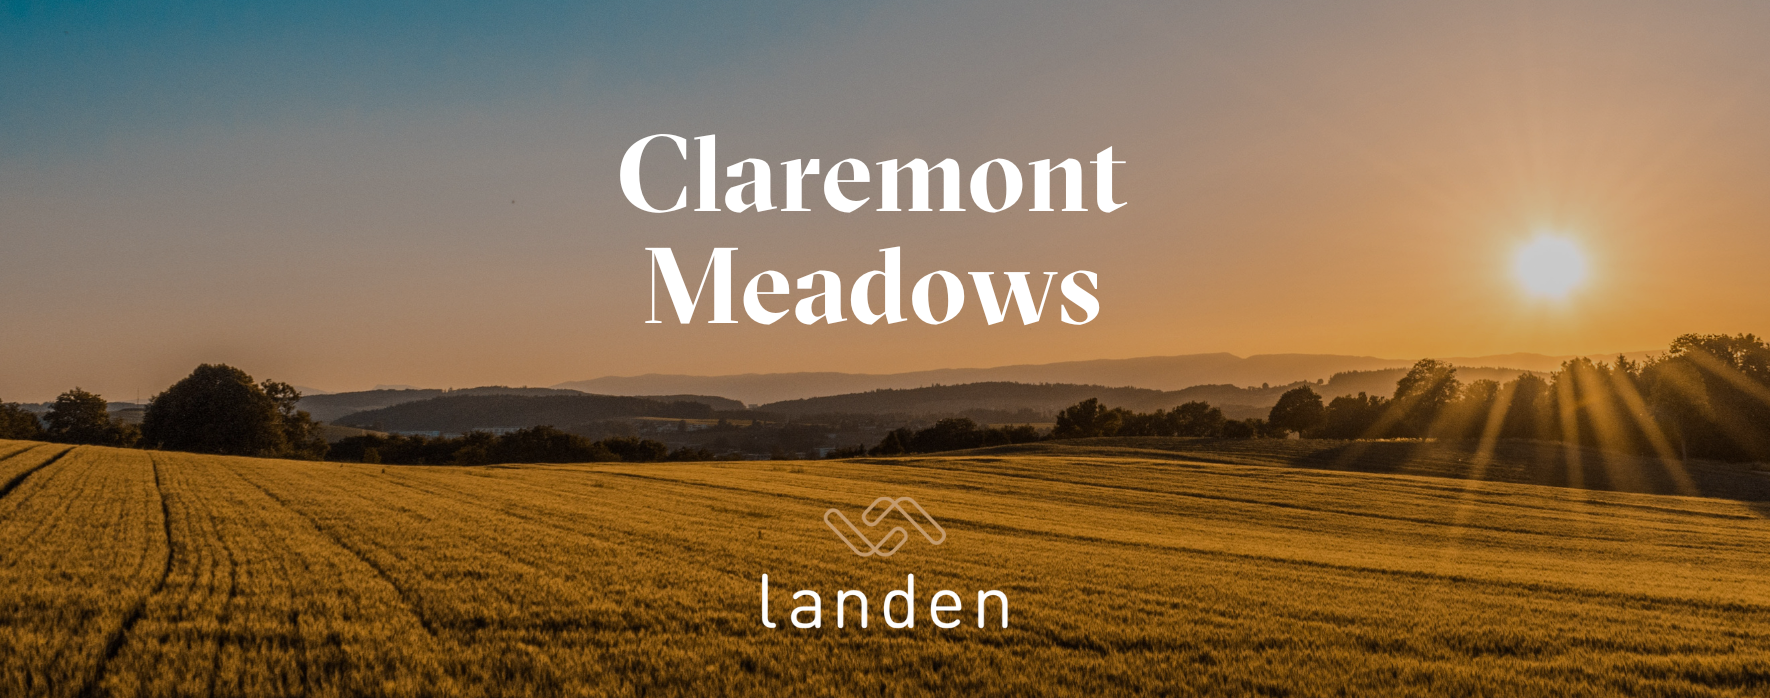 claremont-meadows-north-west-sydney-land-for-sale